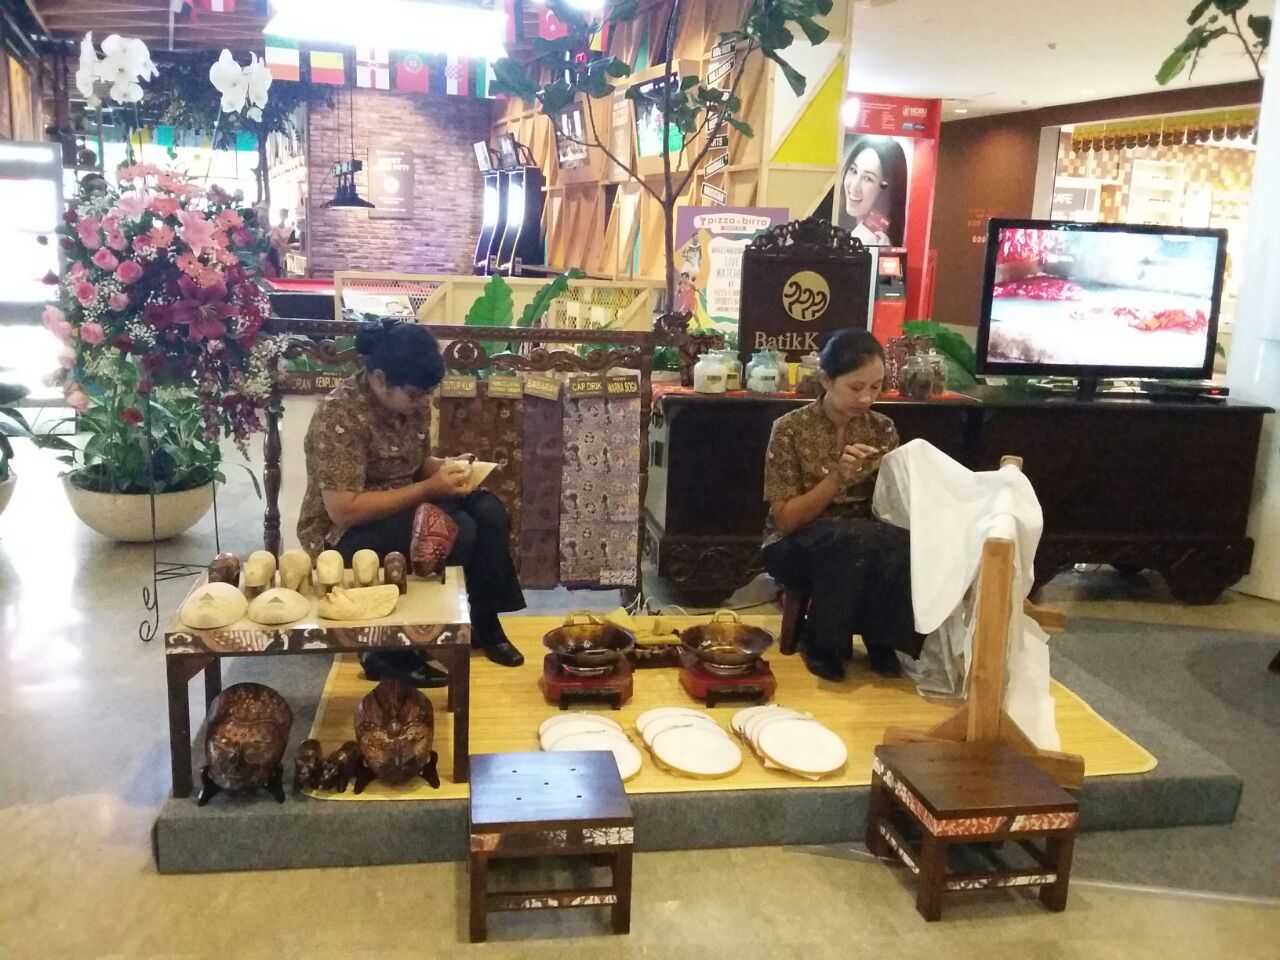  BATIK  KERIS  Tunjungan Plaza  Surabaya Indonesia 